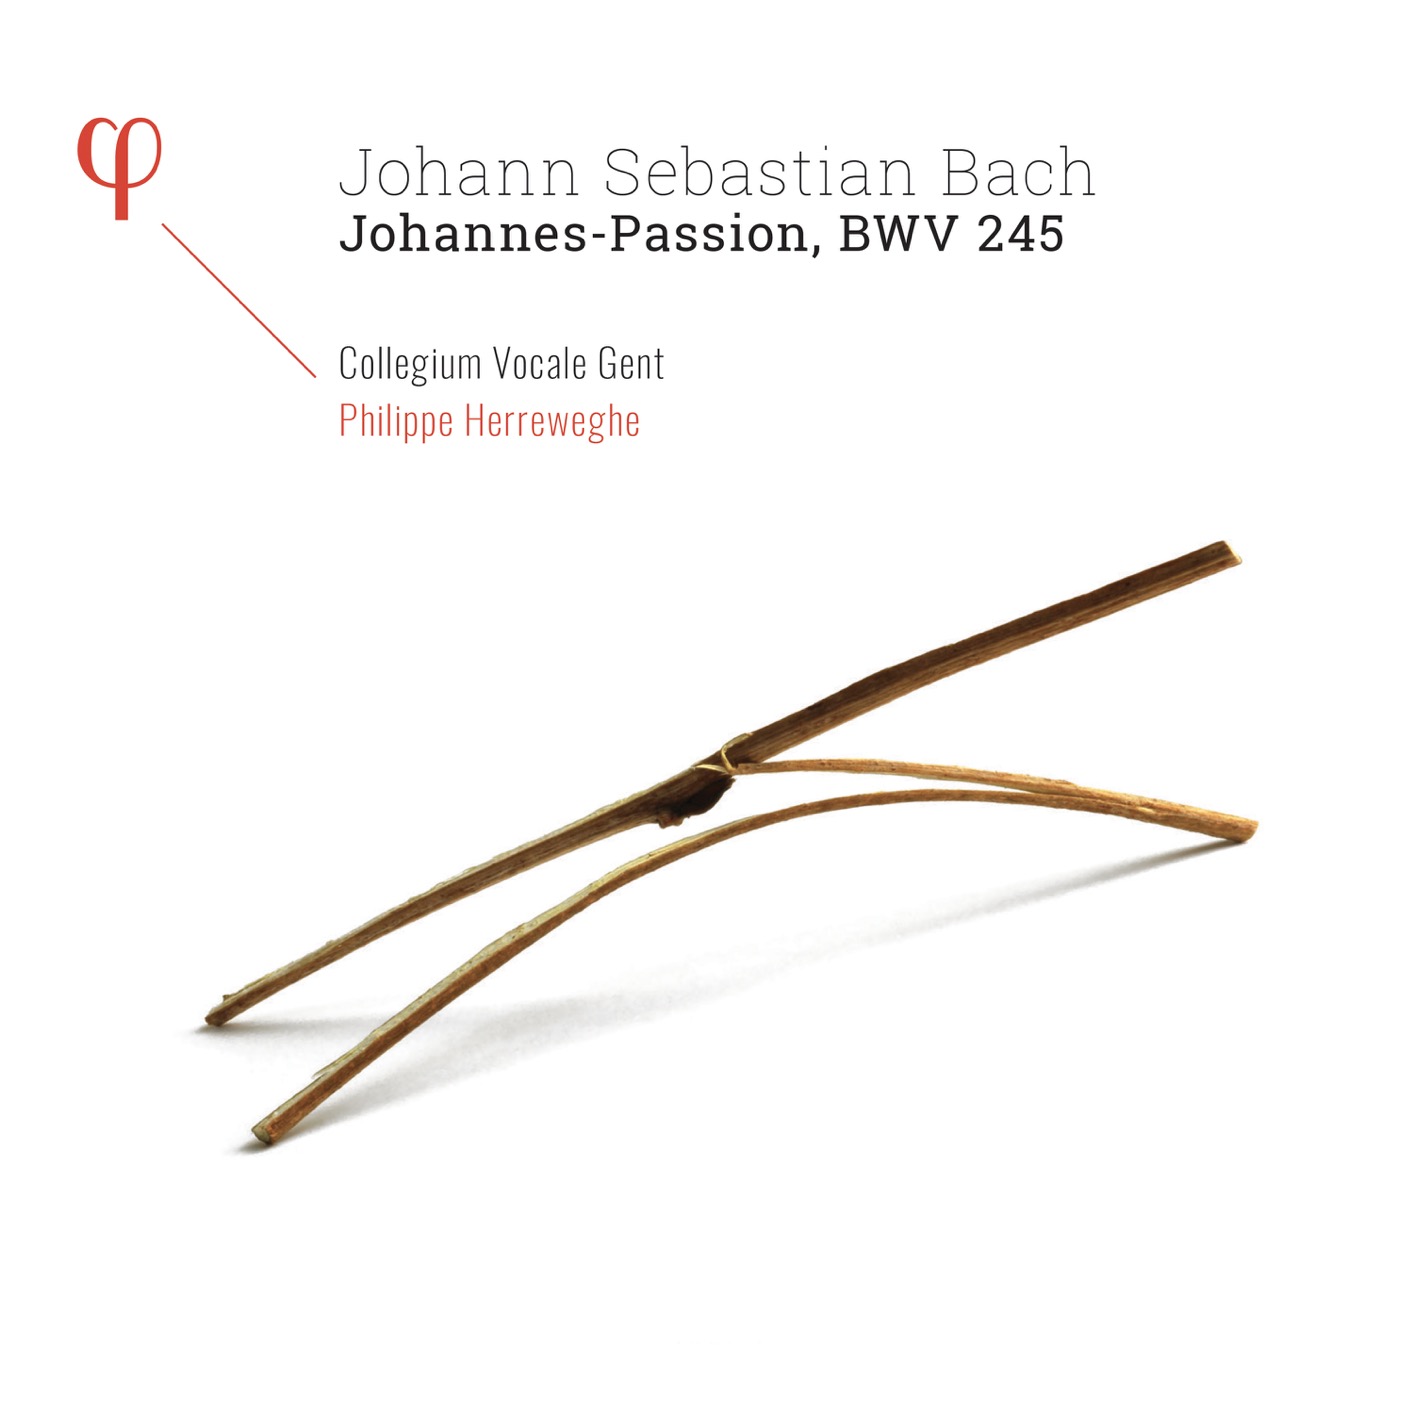 Collegium Vocale Gent, Philippe Herreweghe – Bach: Johannes-Passion, BWV 245 (2020) [FLAC 24bit/48kHz]